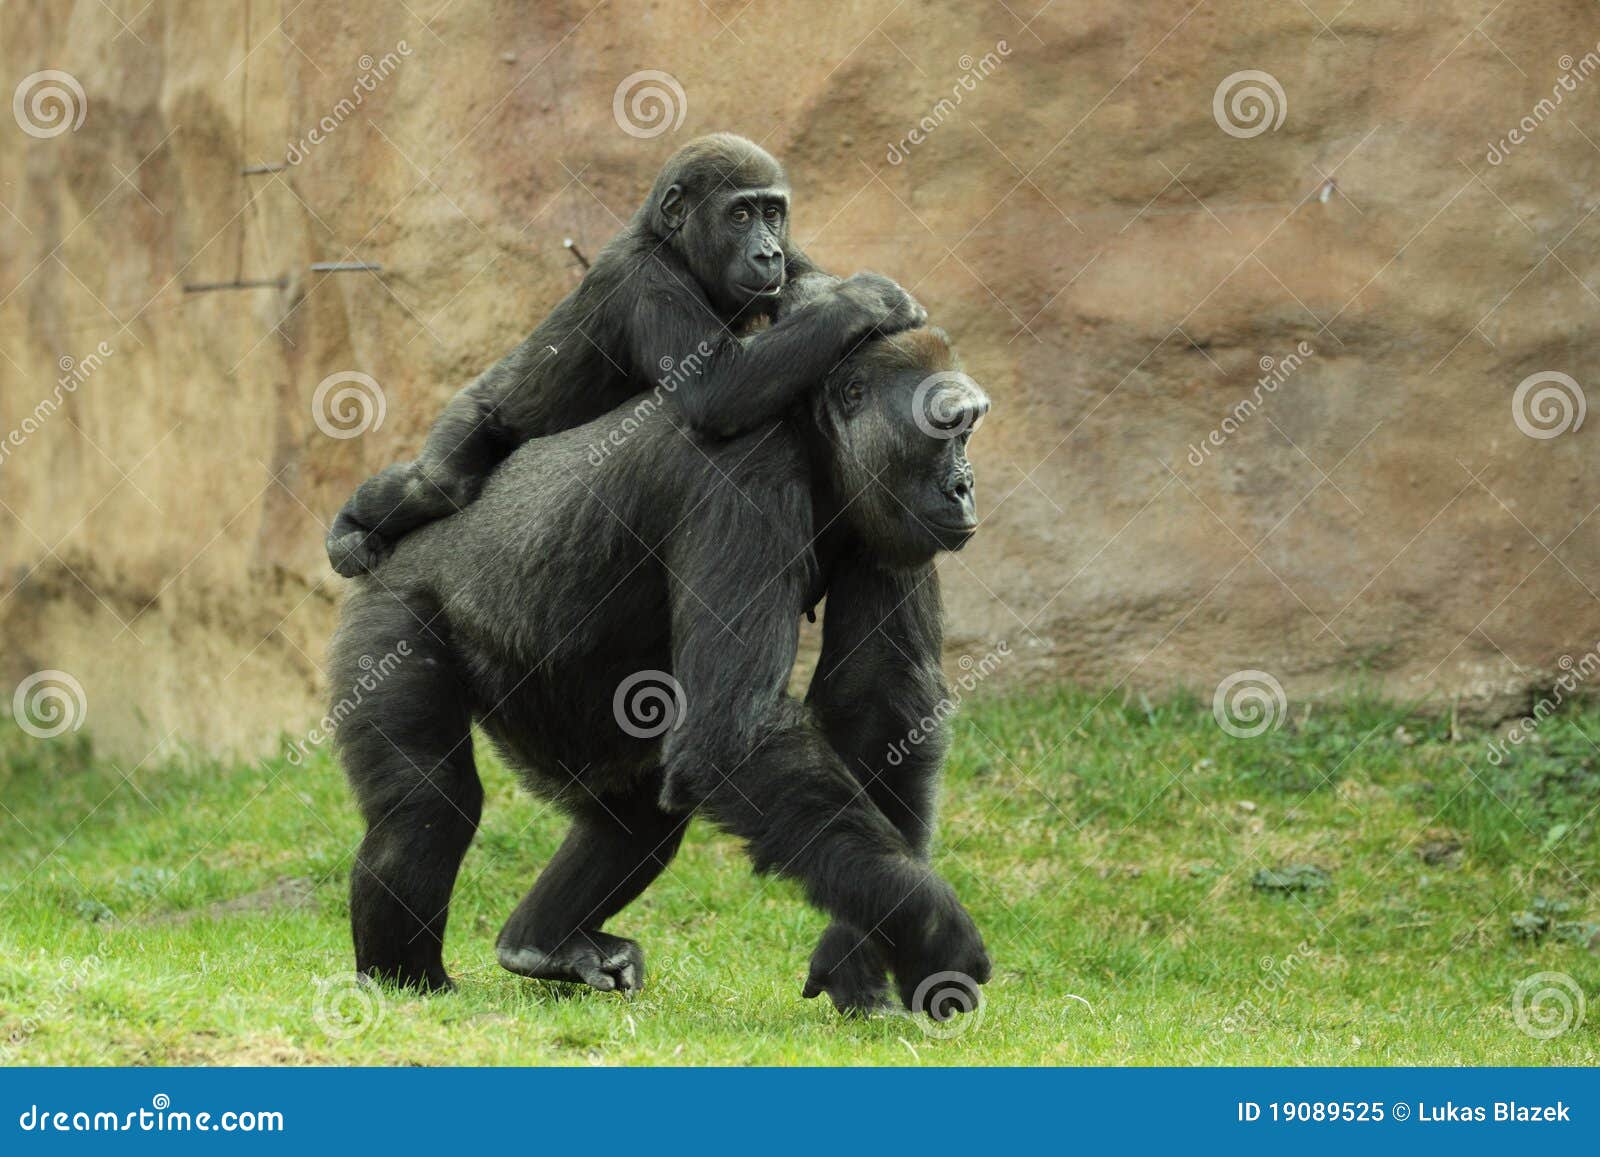 gorilla family